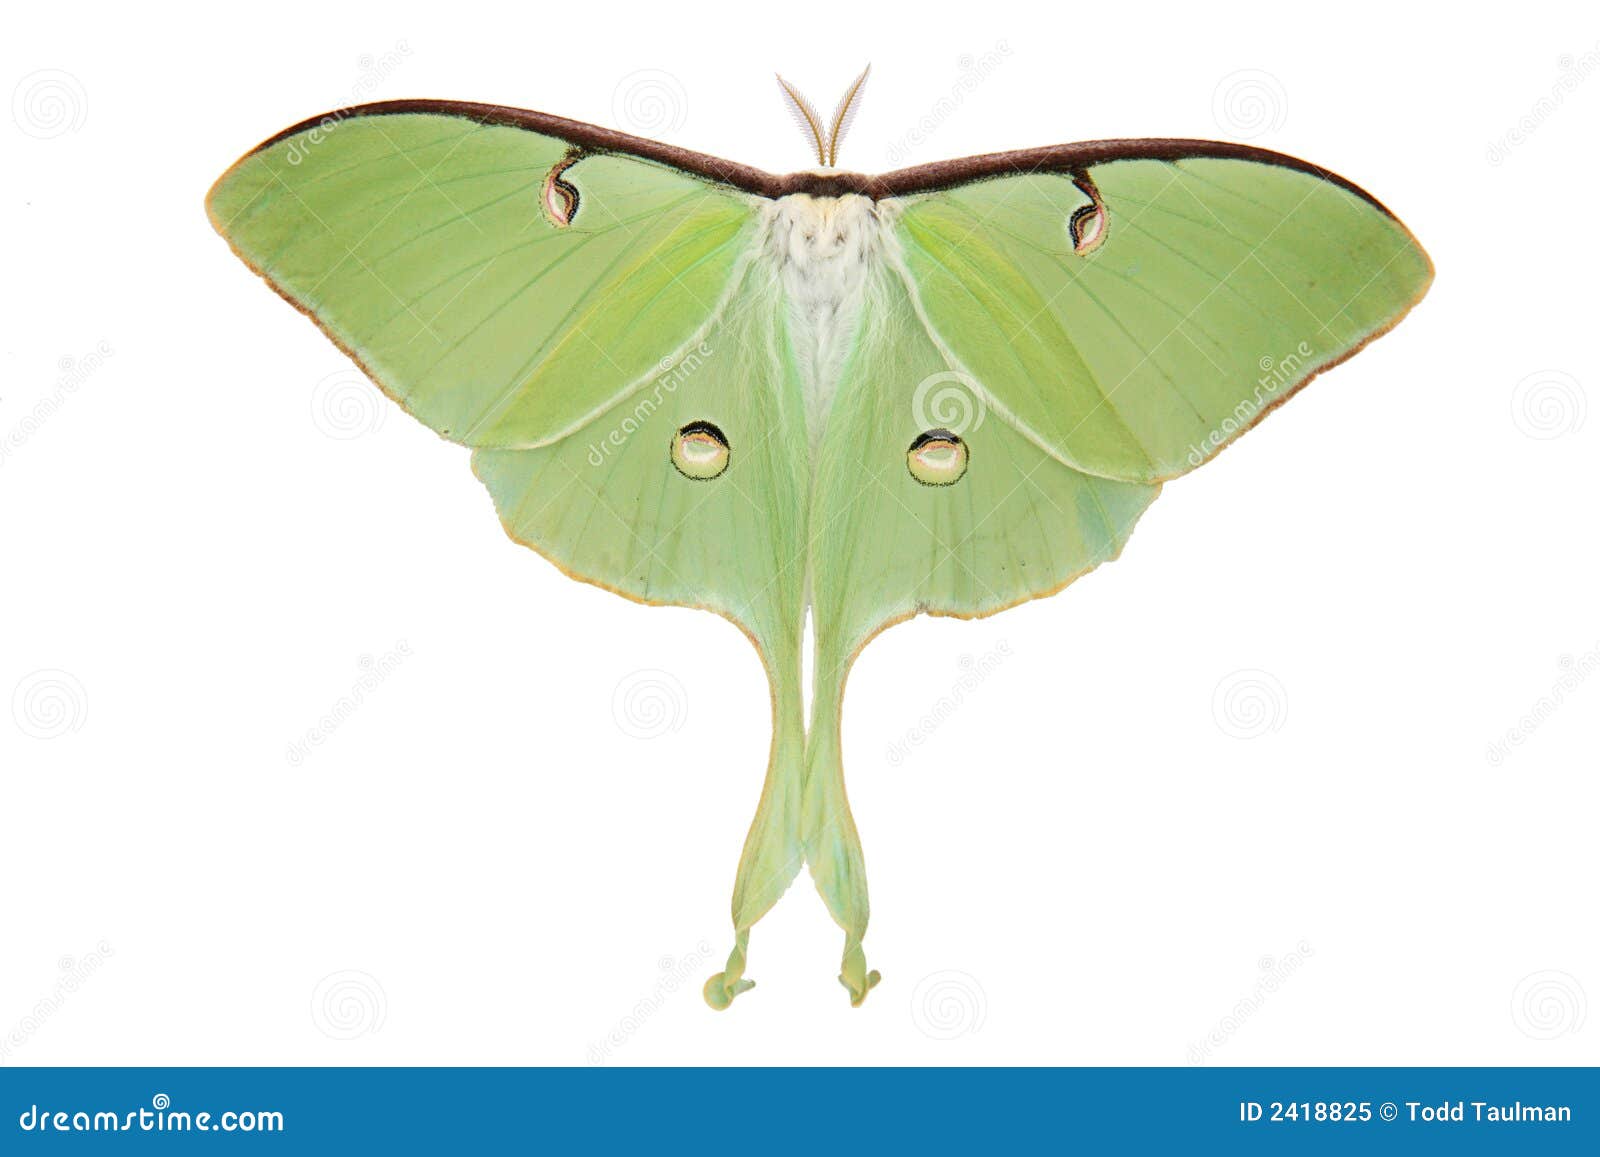 luna moth (actias luna)